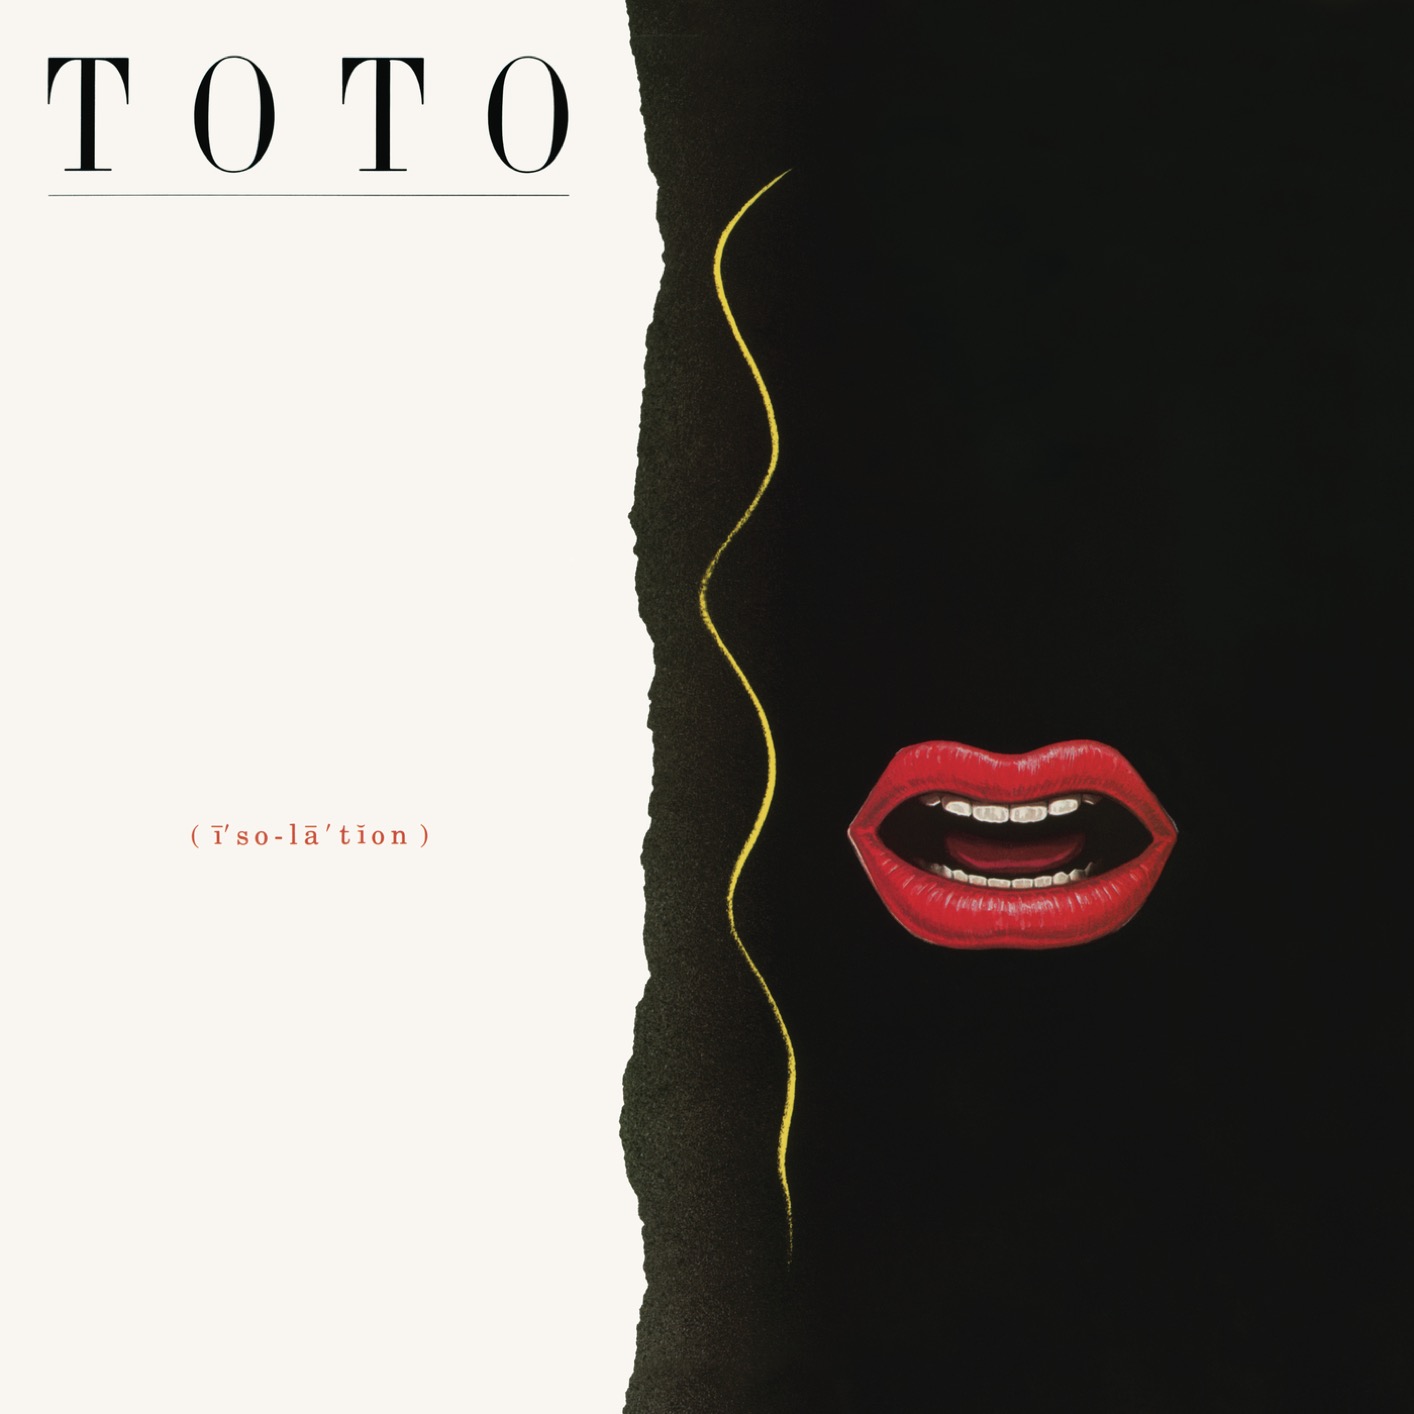 Toto - Isolation (Remastered) (1984/2020) [FLAC 24bit/192kHz]